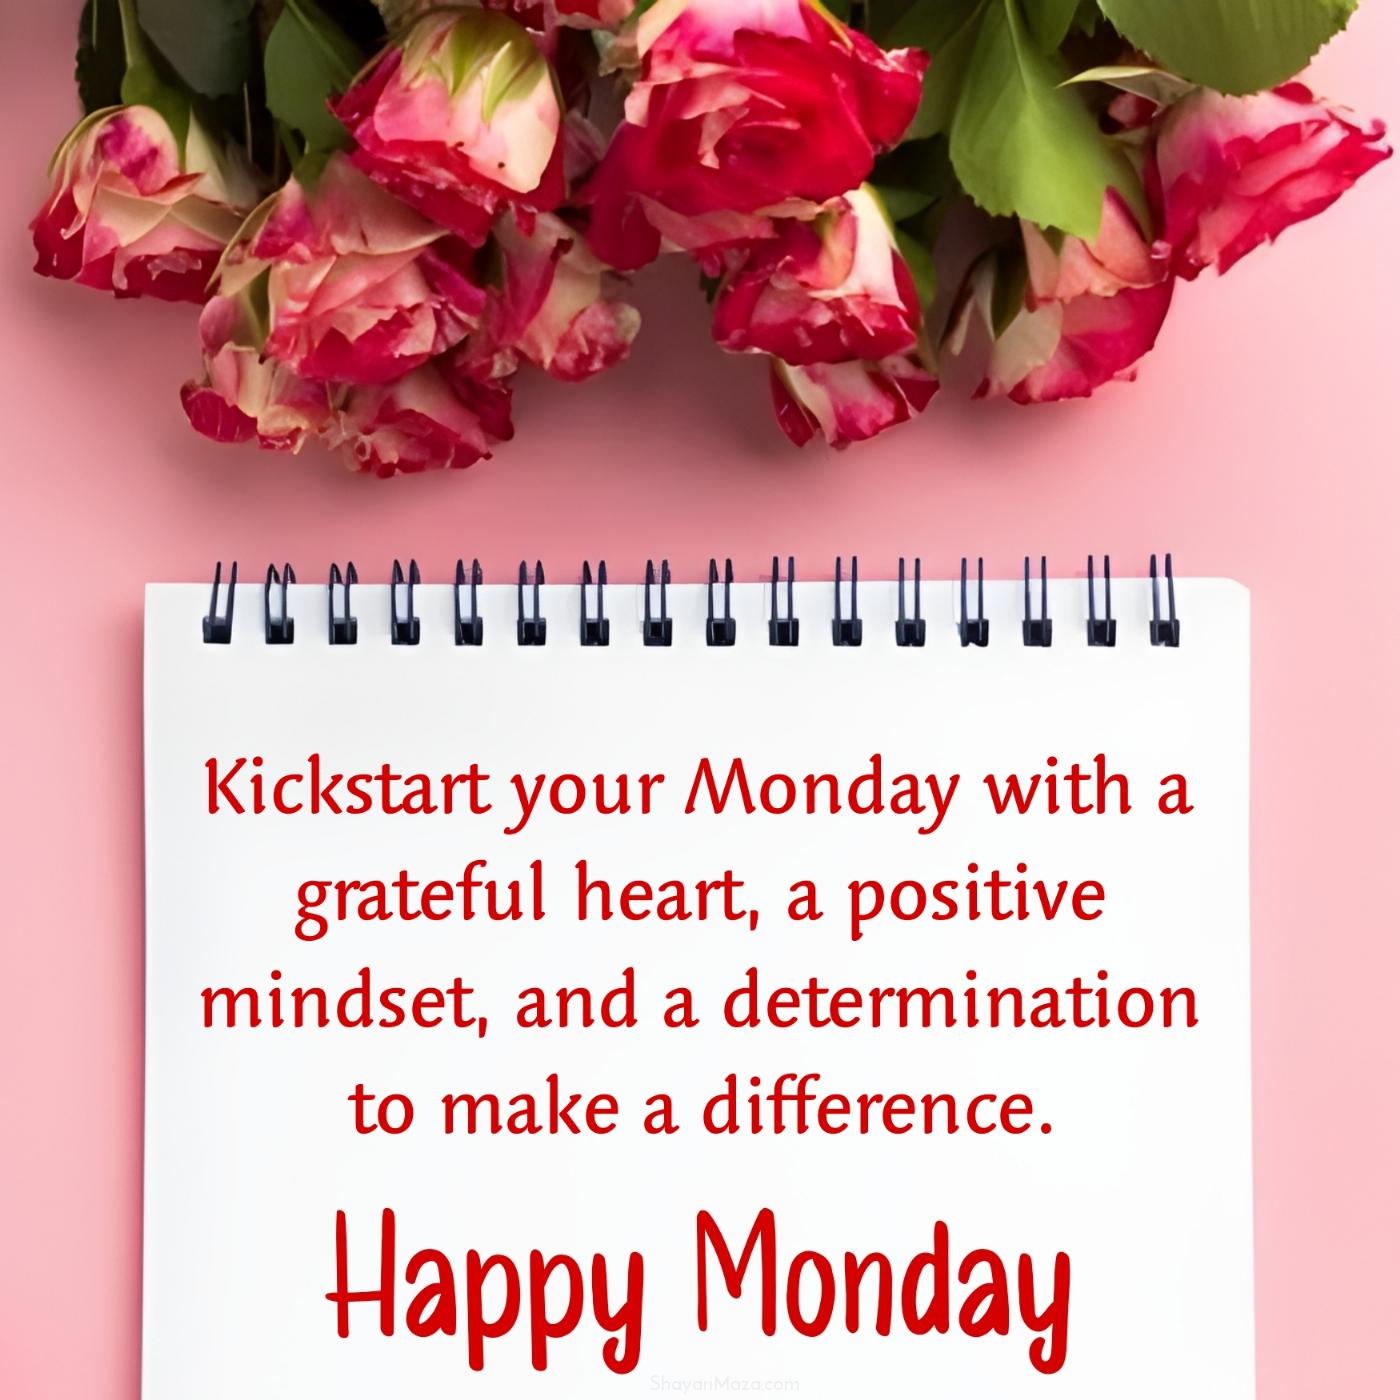 Kickstart your Monday with a grateful heart a positive mindset